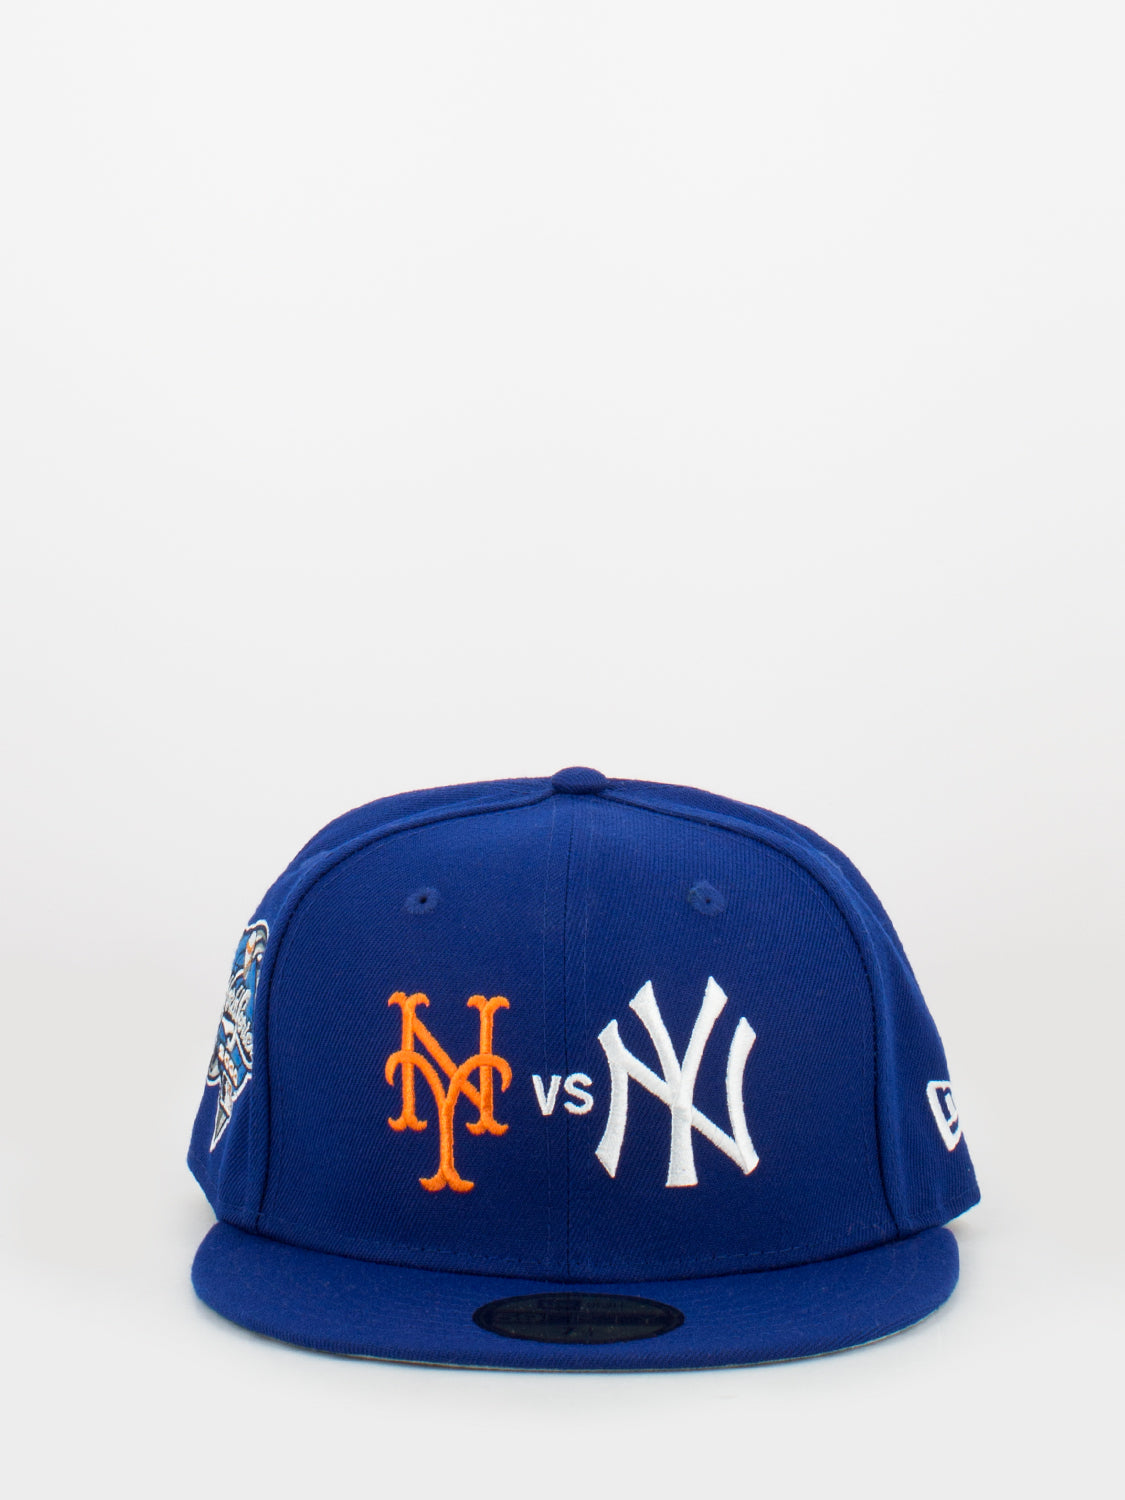 New Era Cooperstown 59FIFTY New York Mets Vs Yankees 60222309